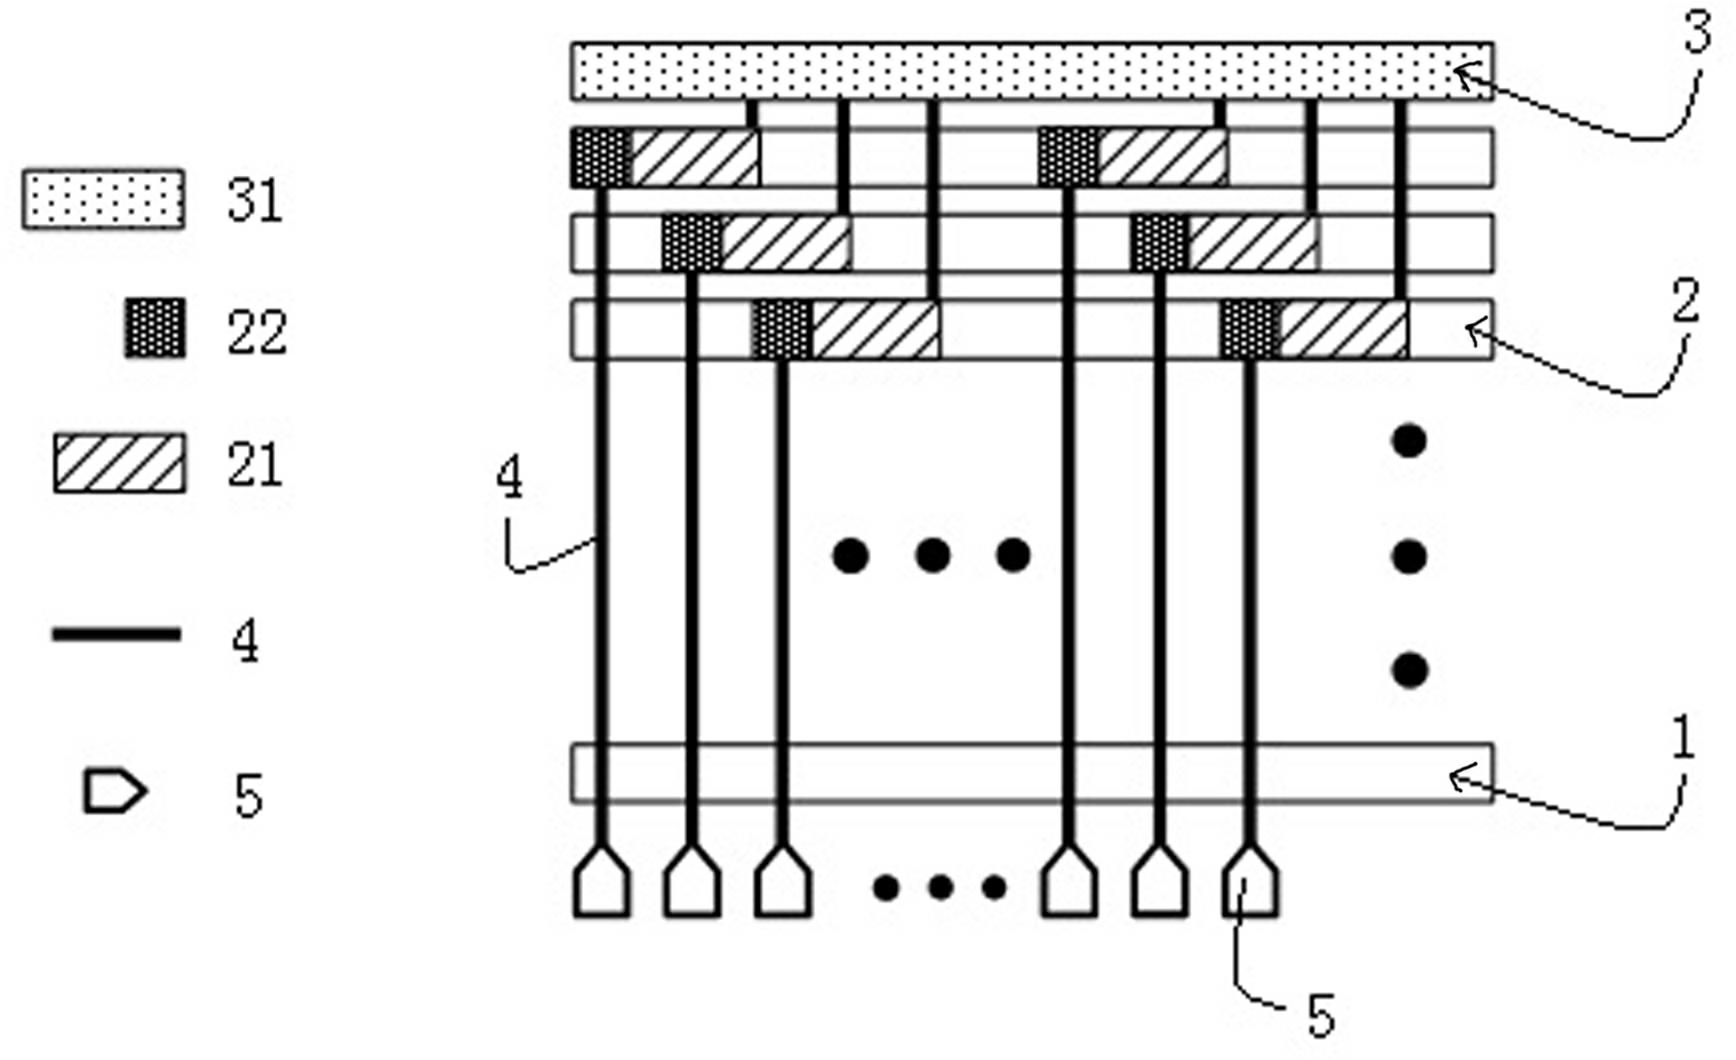 Drive circuit structure of spatial light modulator